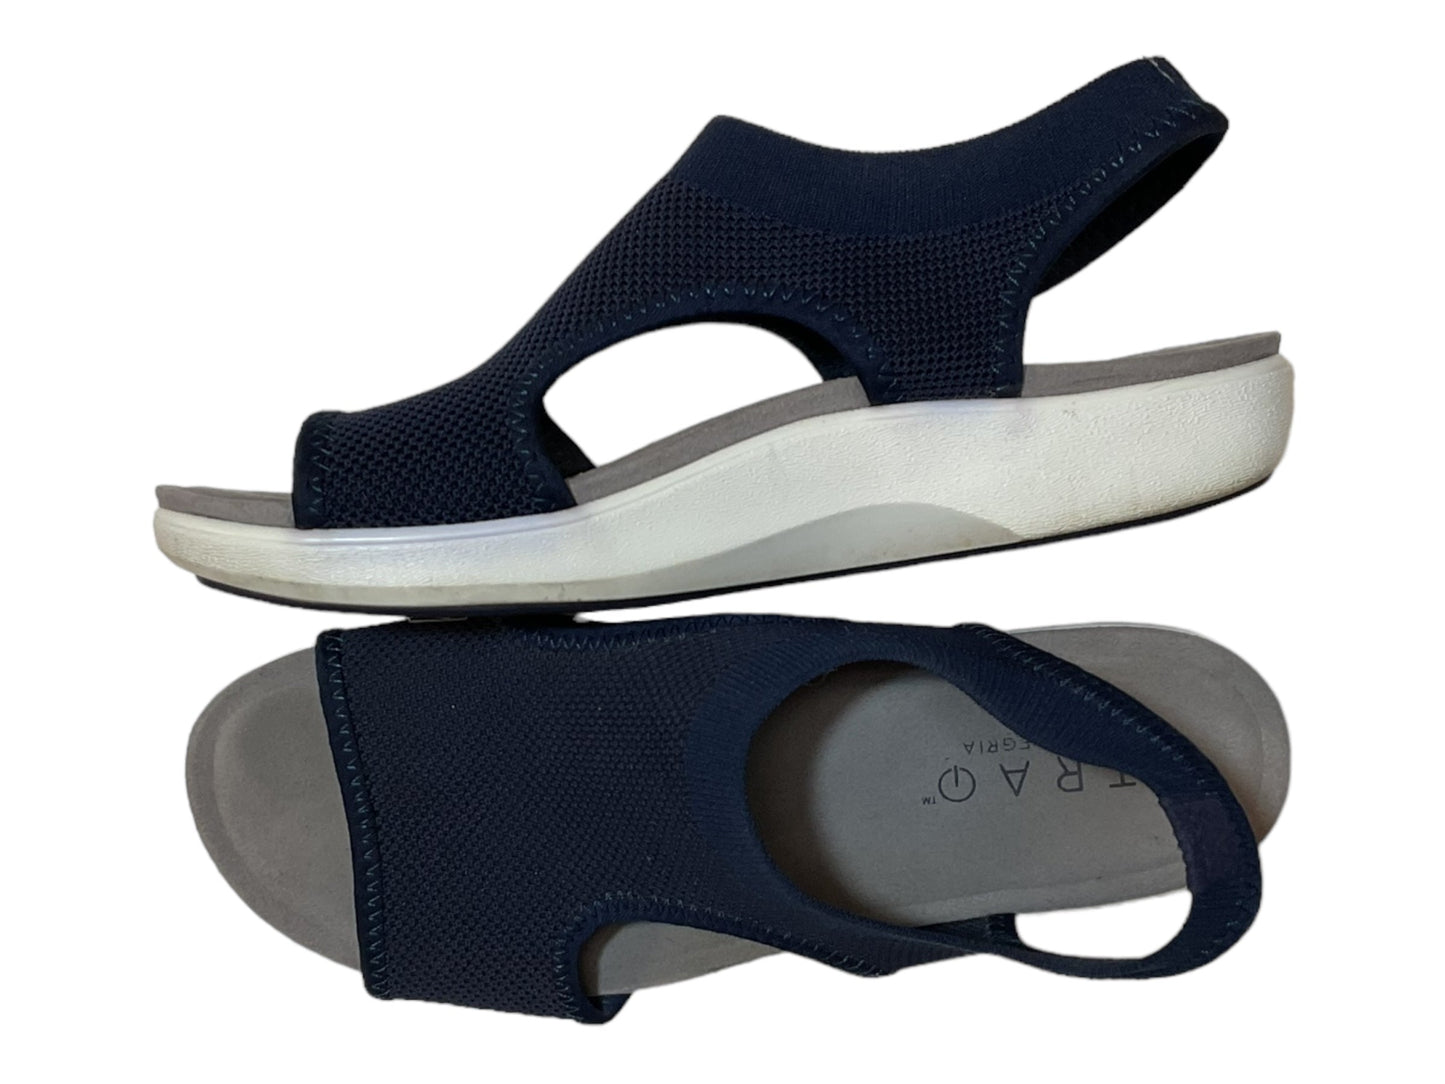 Navy Sandals Flats Alegria, Size 8